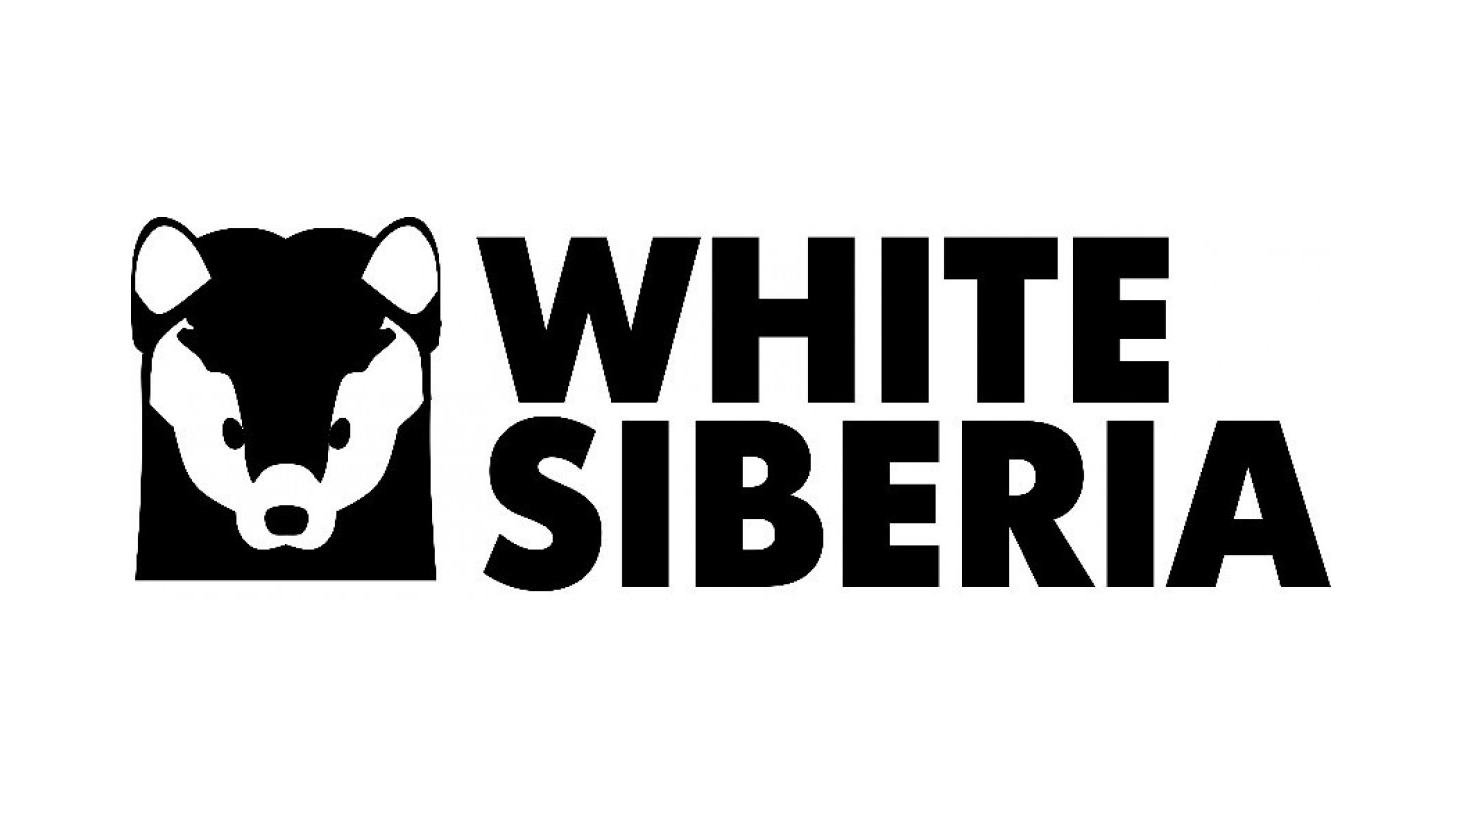 White Siberia